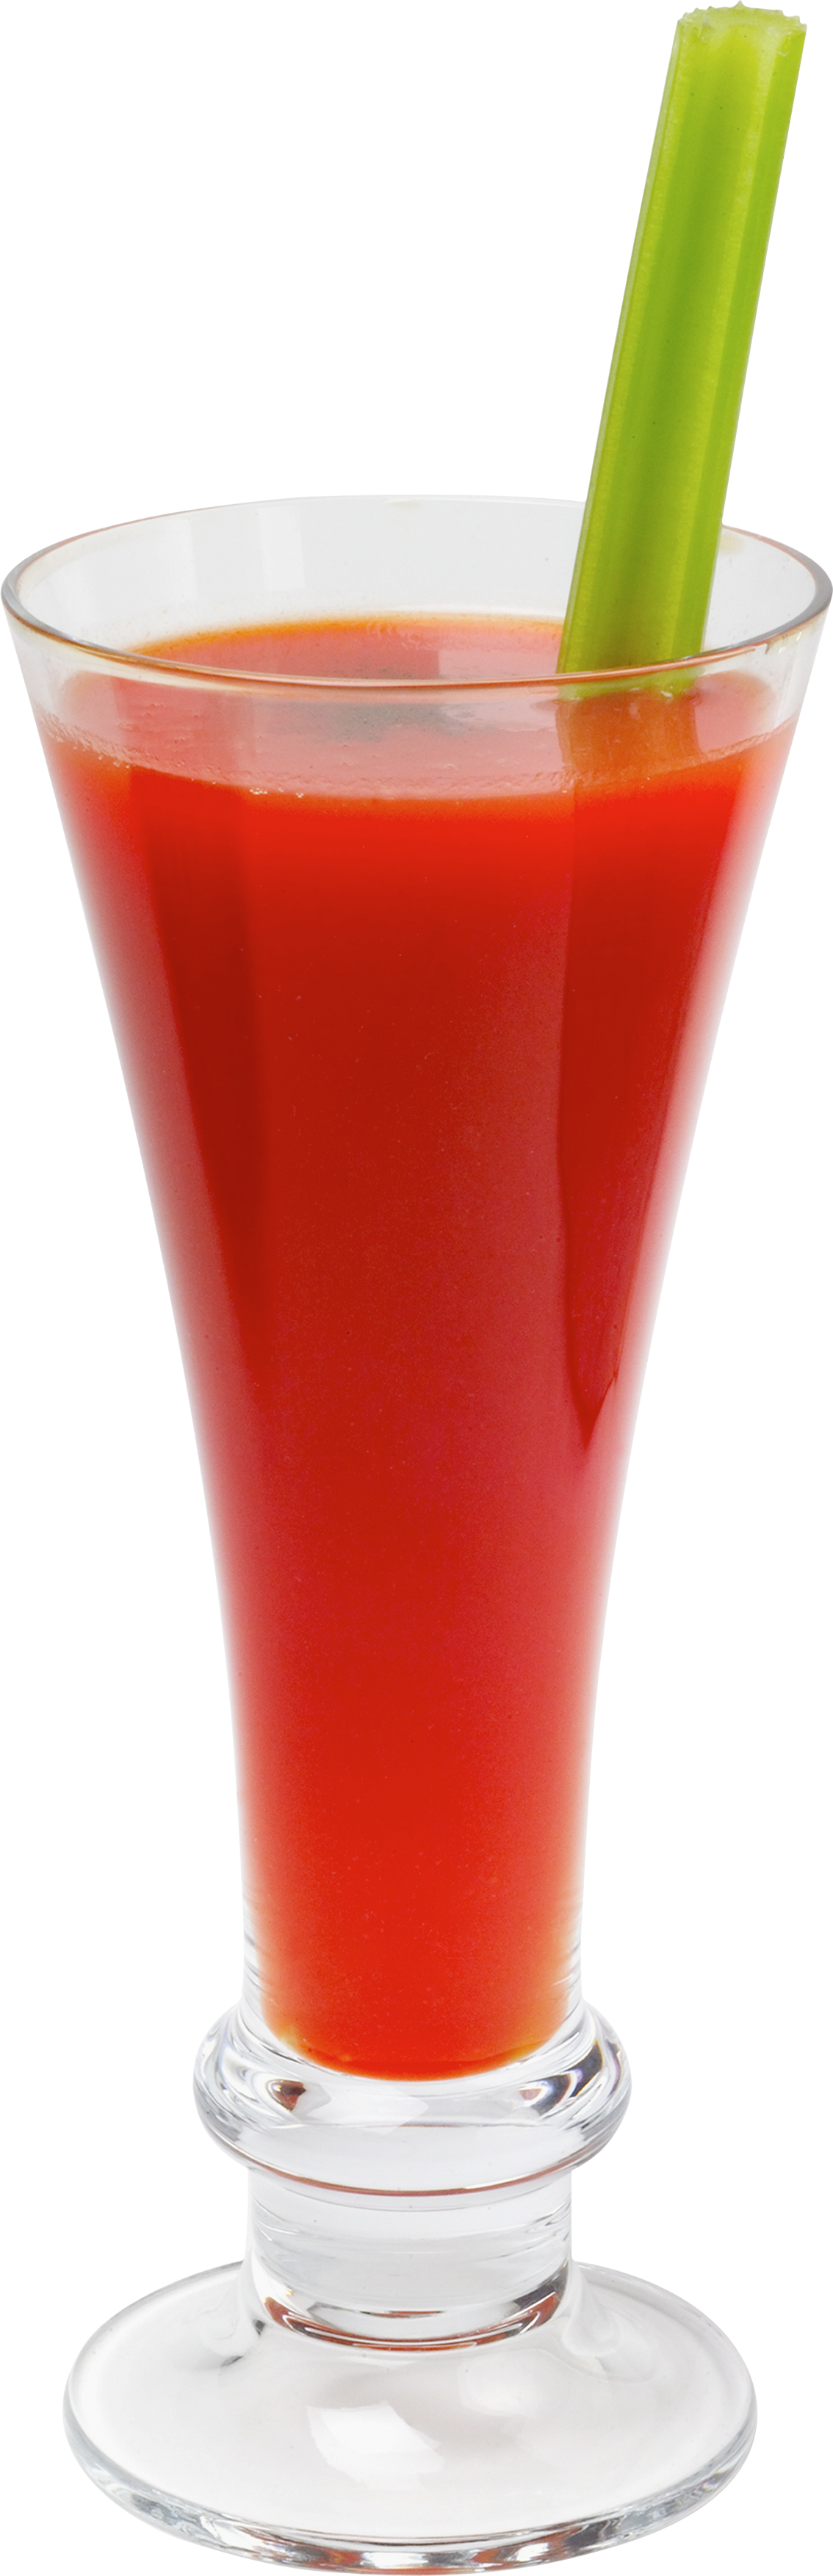 Tomato Juice Png Transparent Image - Glass Of Juice, Transparent background PNG HD thumbnail